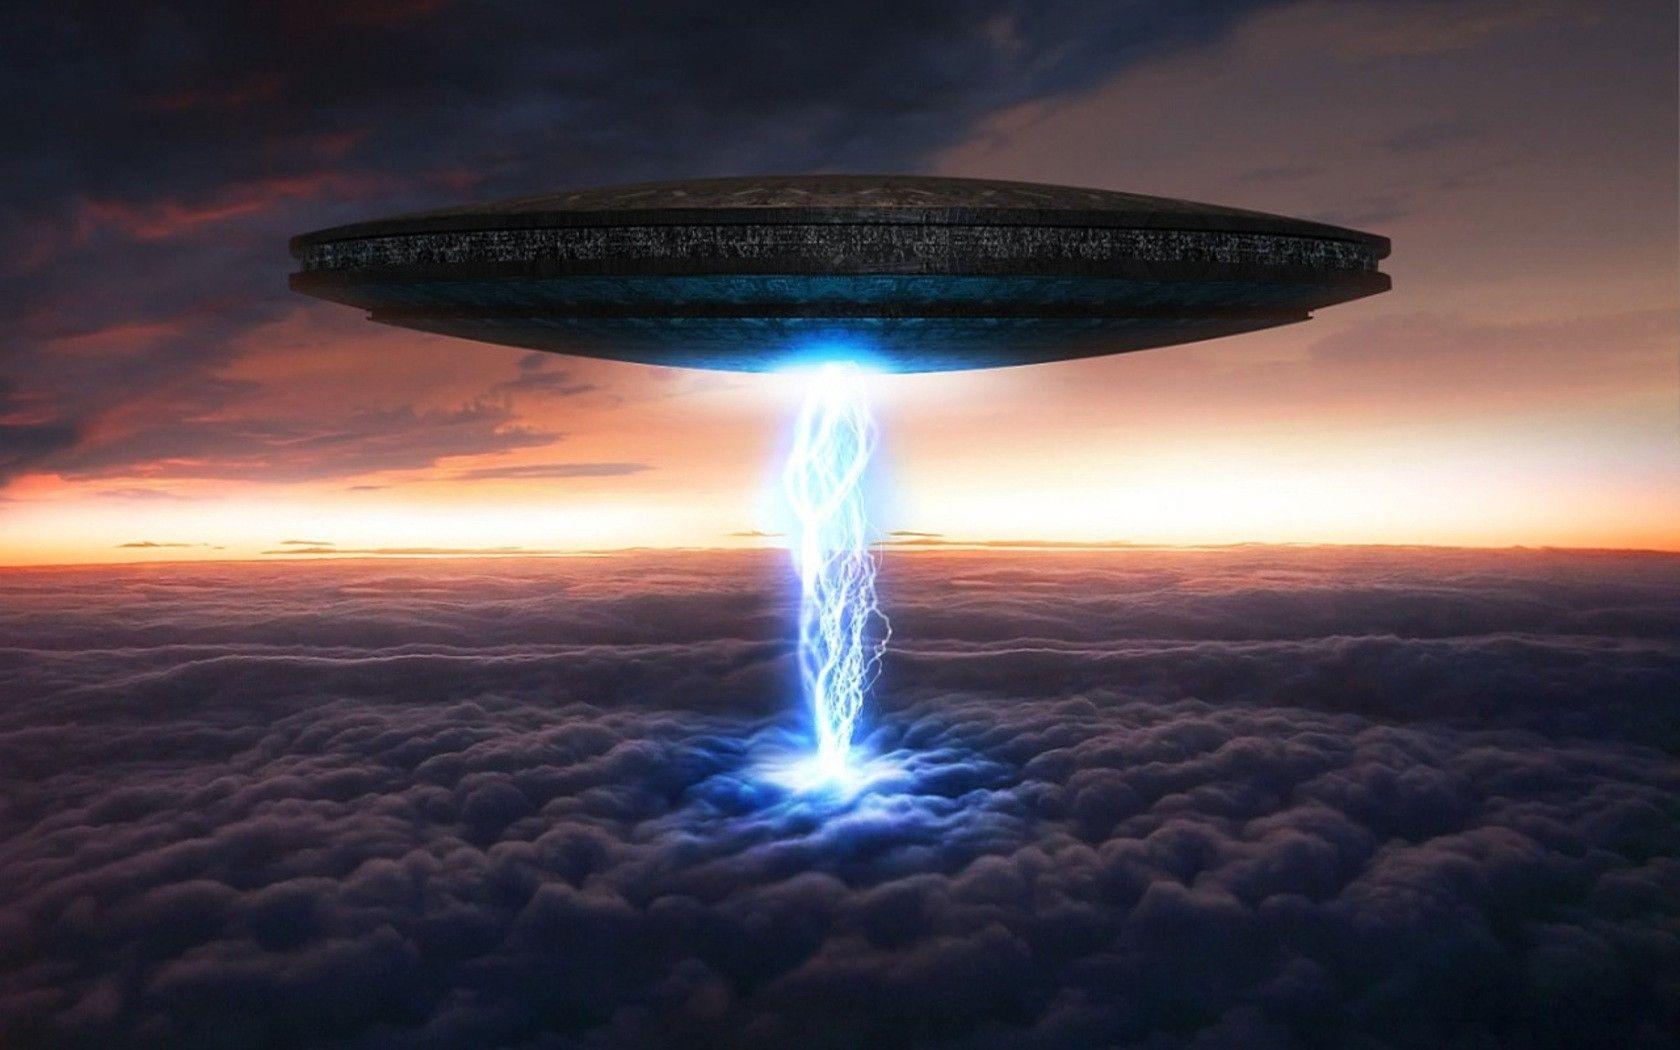 Sci fi aliens ufo spaceship spacecraft sky clouds art invasion